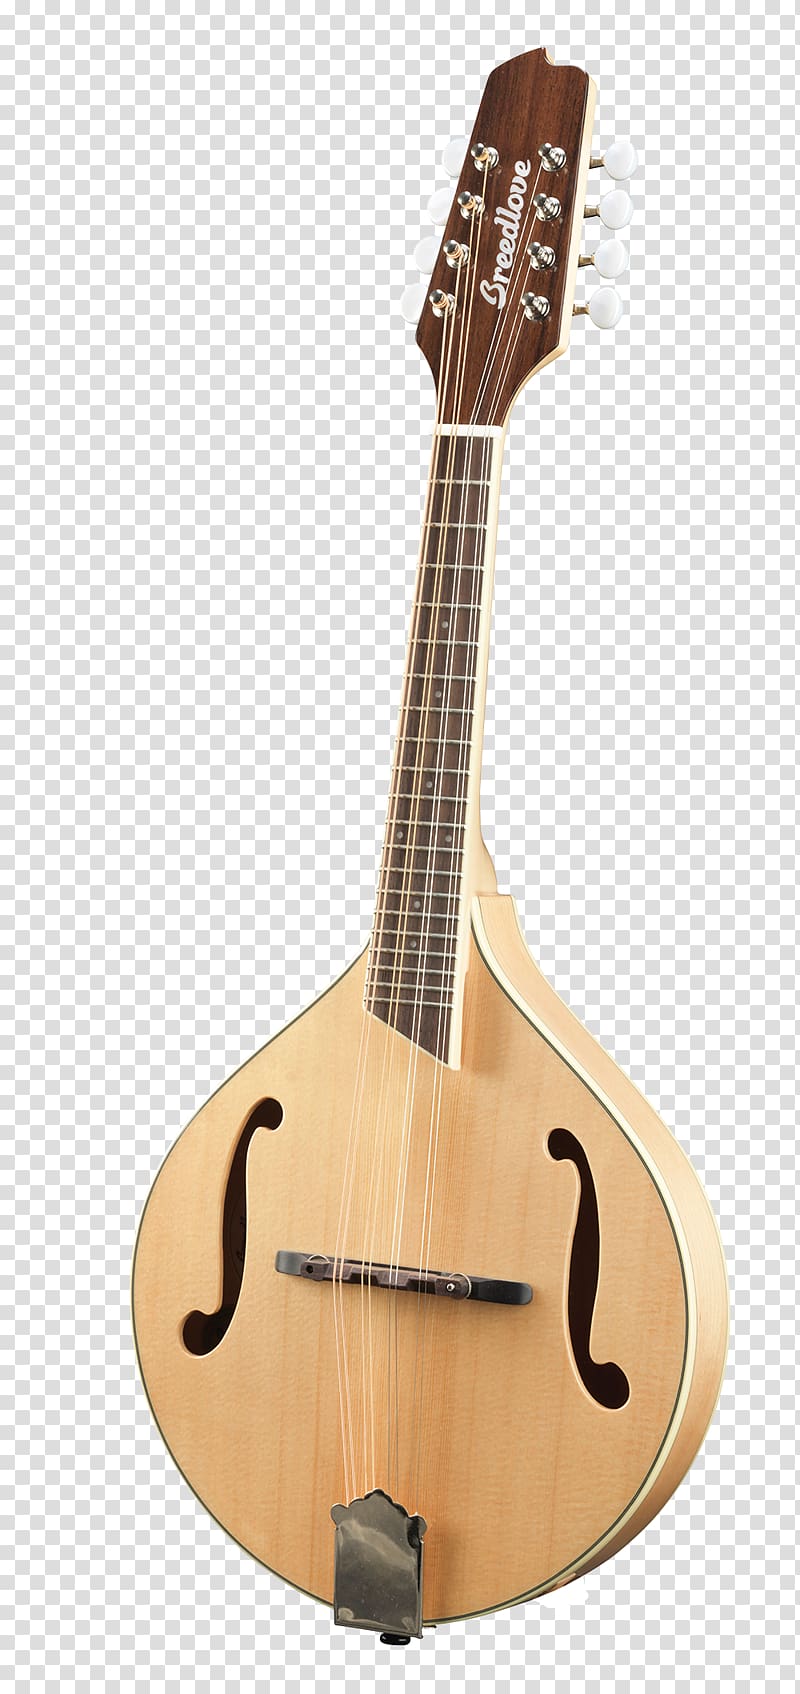 Tiple Mandolin Acoustic guitar Cuatro Cavaquinho, Acoustic Guitar transparent background PNG clipart